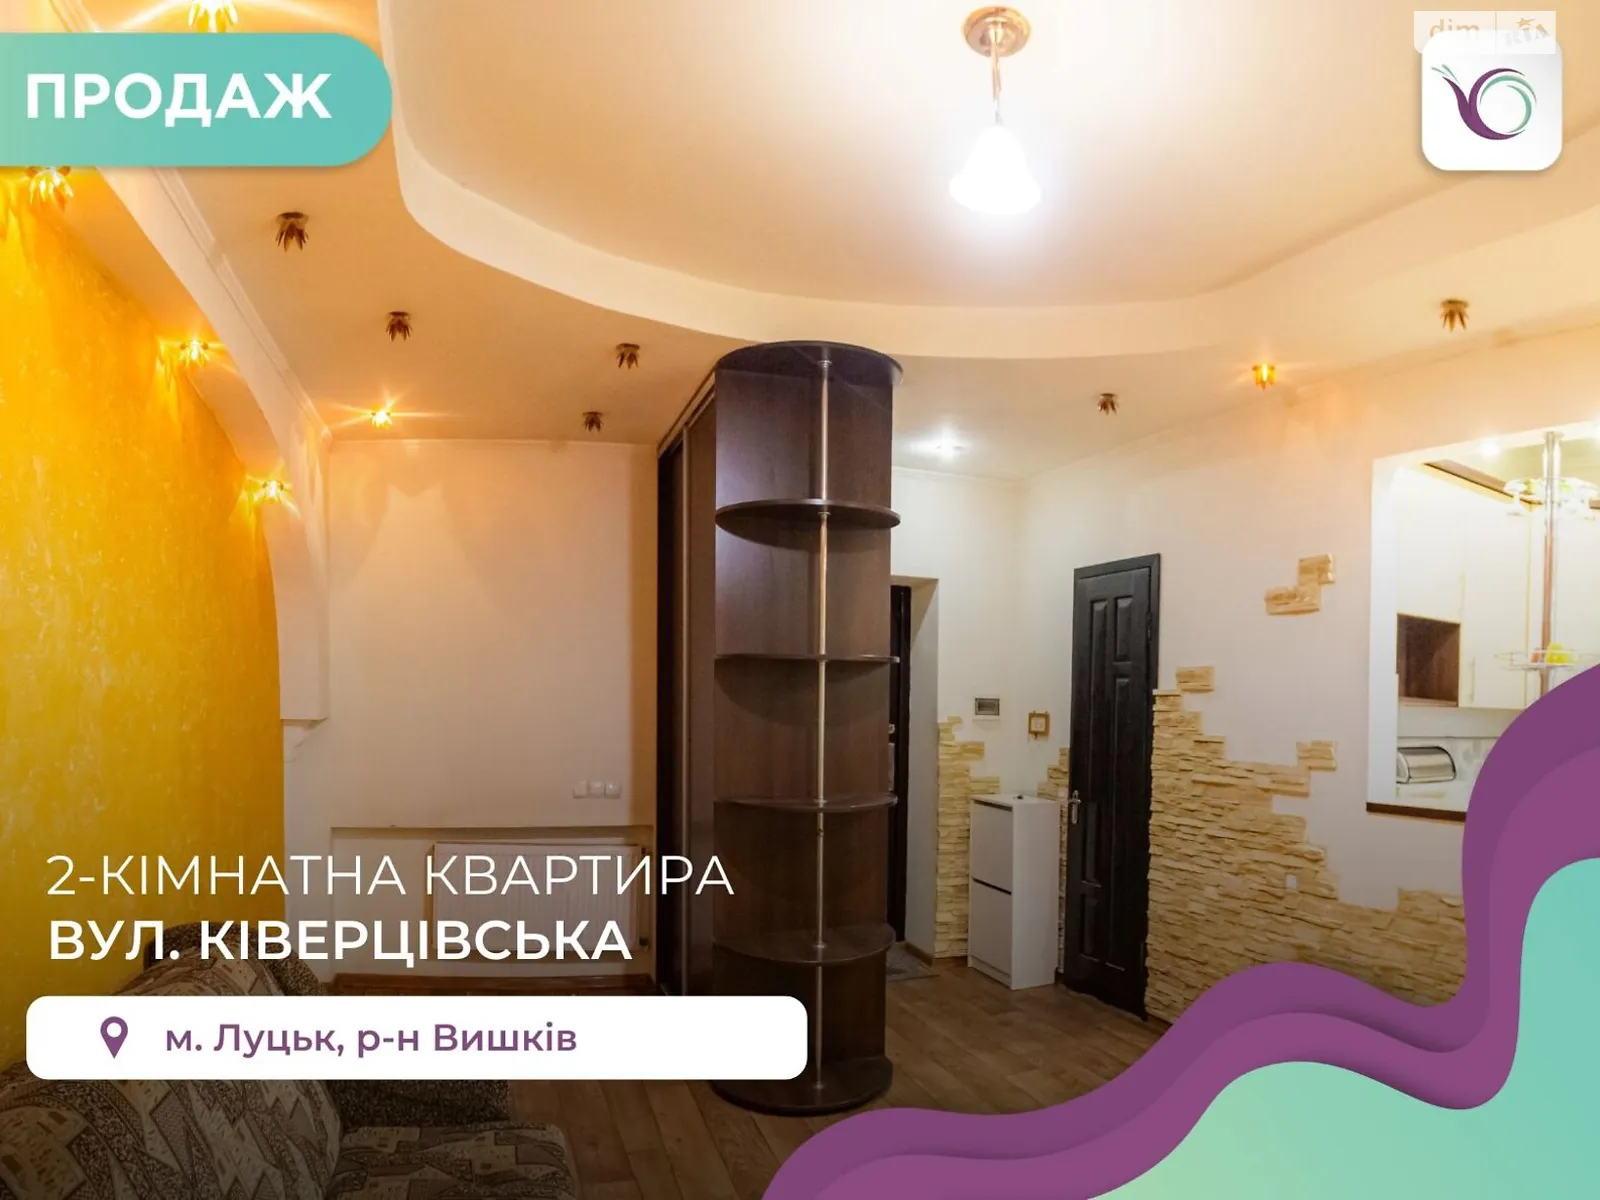 2-кімнатна квартира 40 кв. м у Луцьку, цена: 35000 $